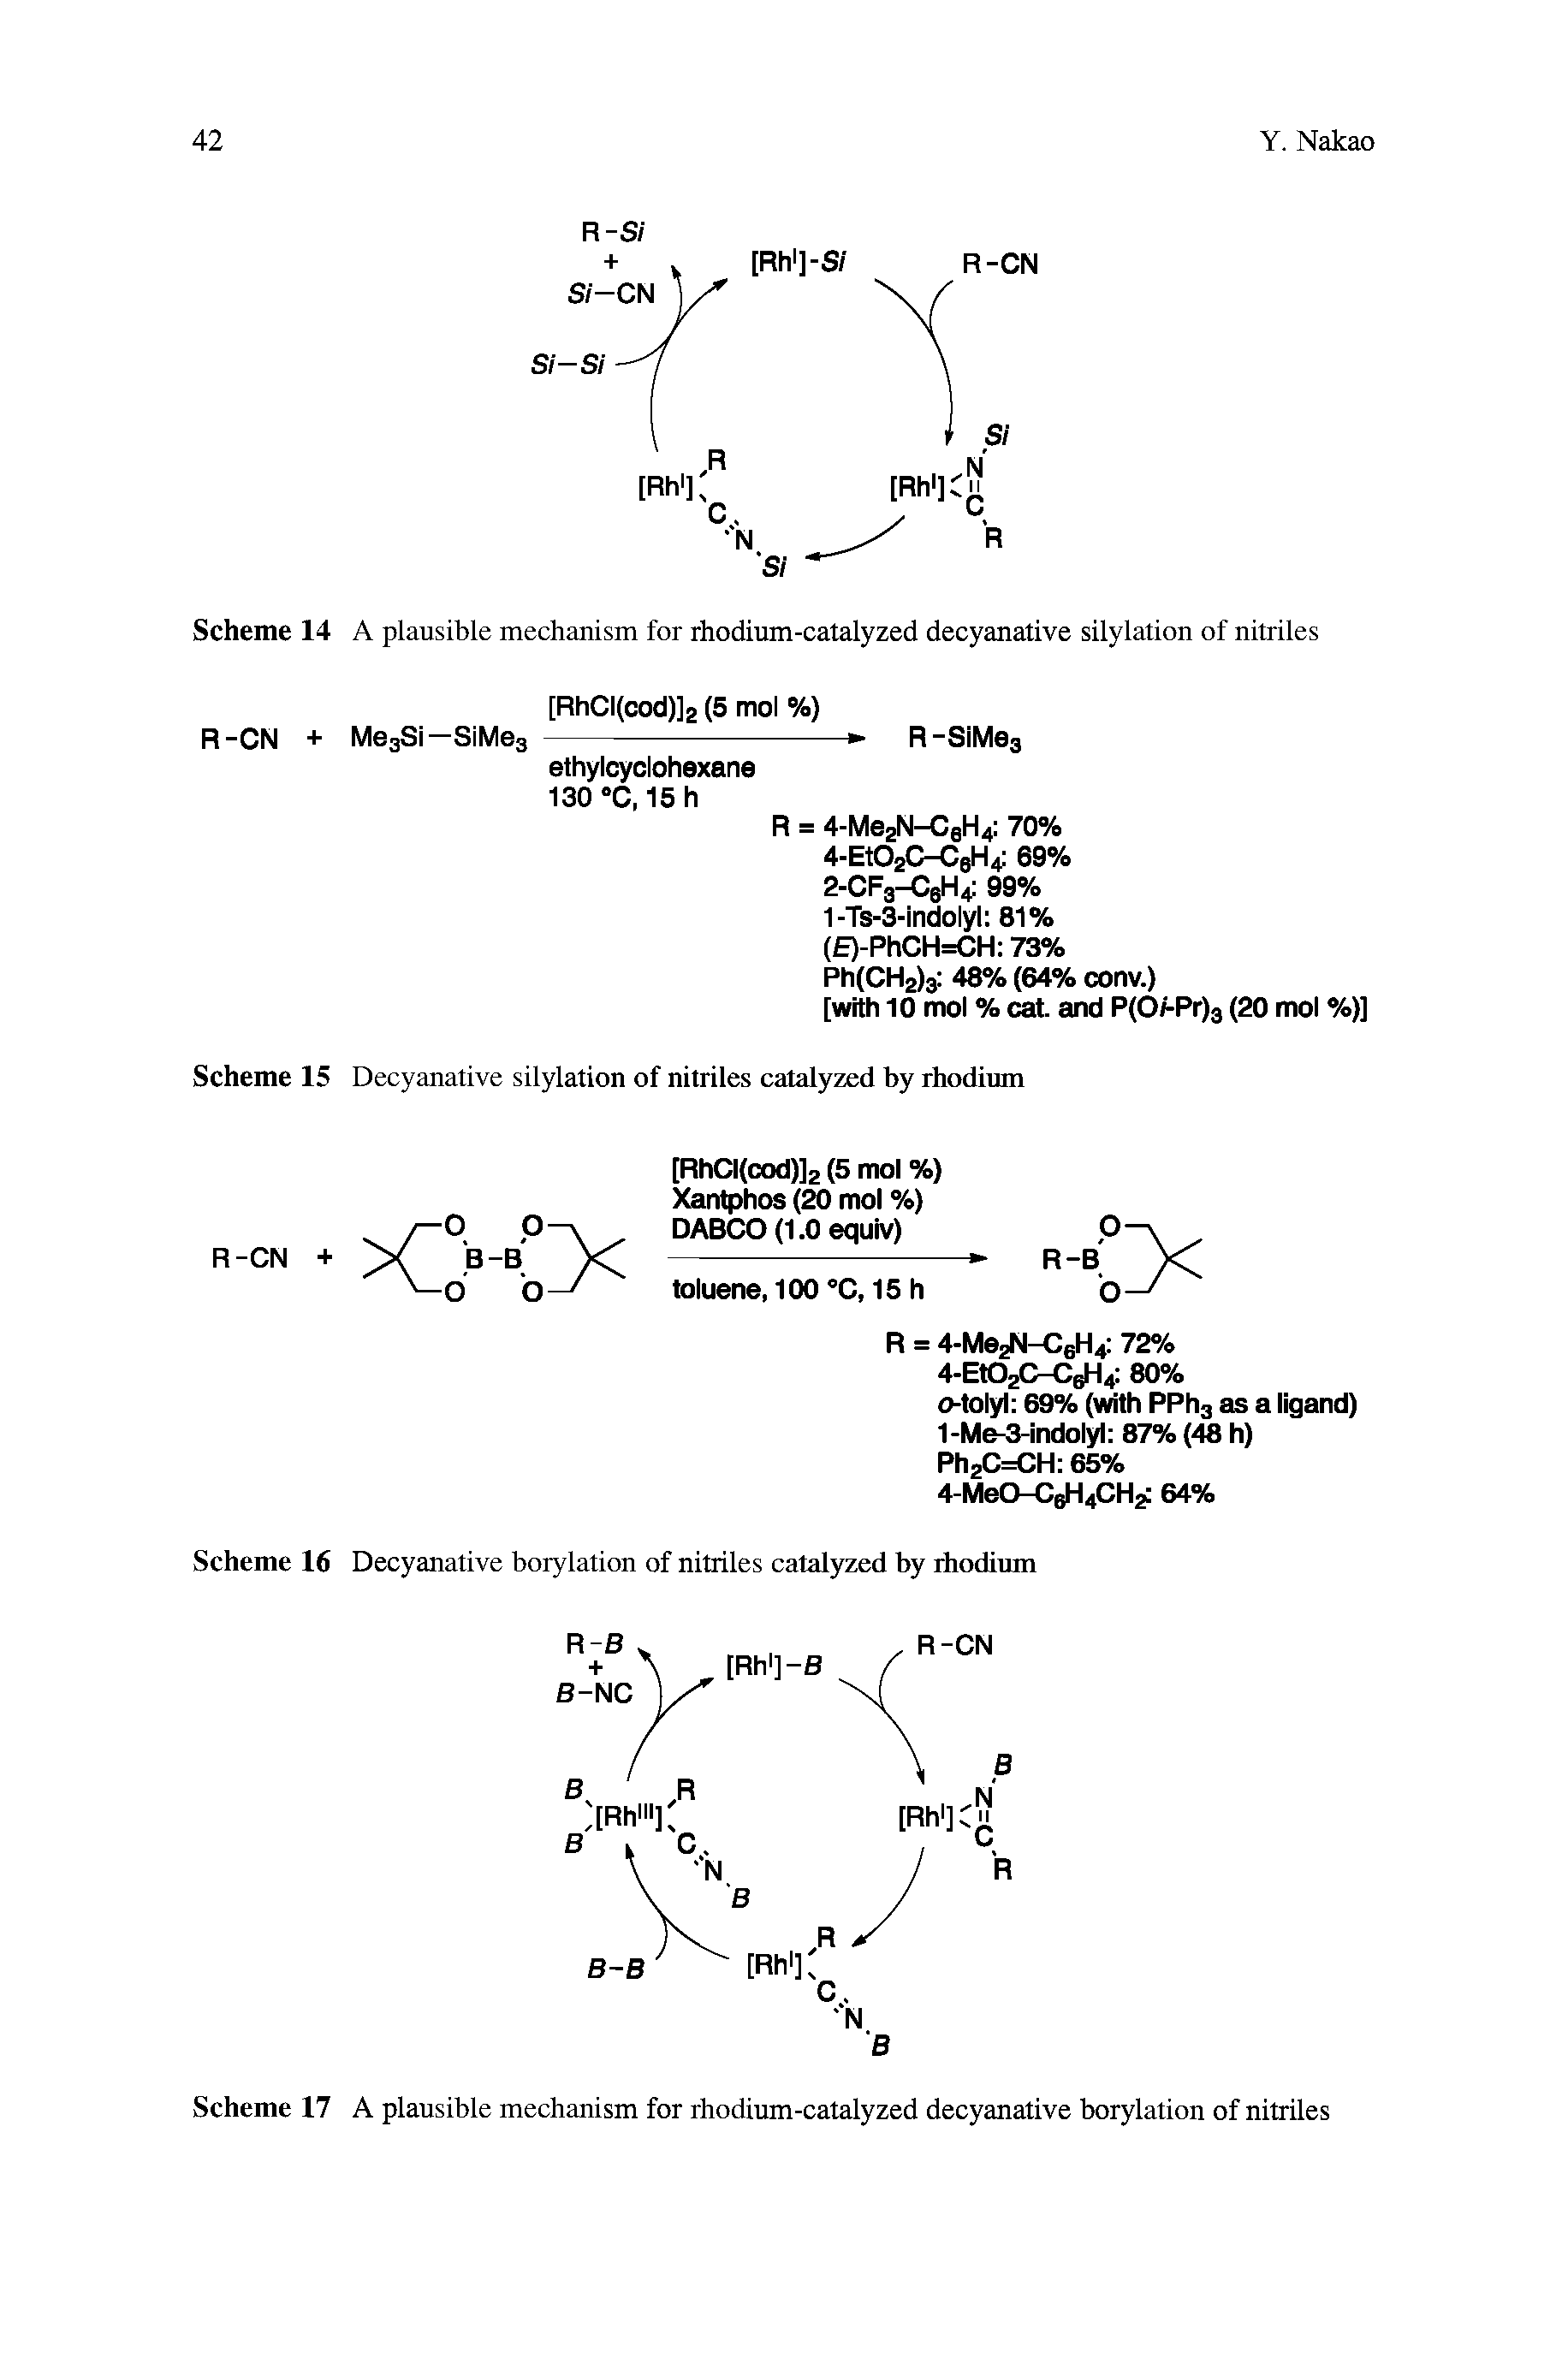 Scheme 17 A plausible mechanism for rhodium-catalyzed decyanative borylation of nitriles...